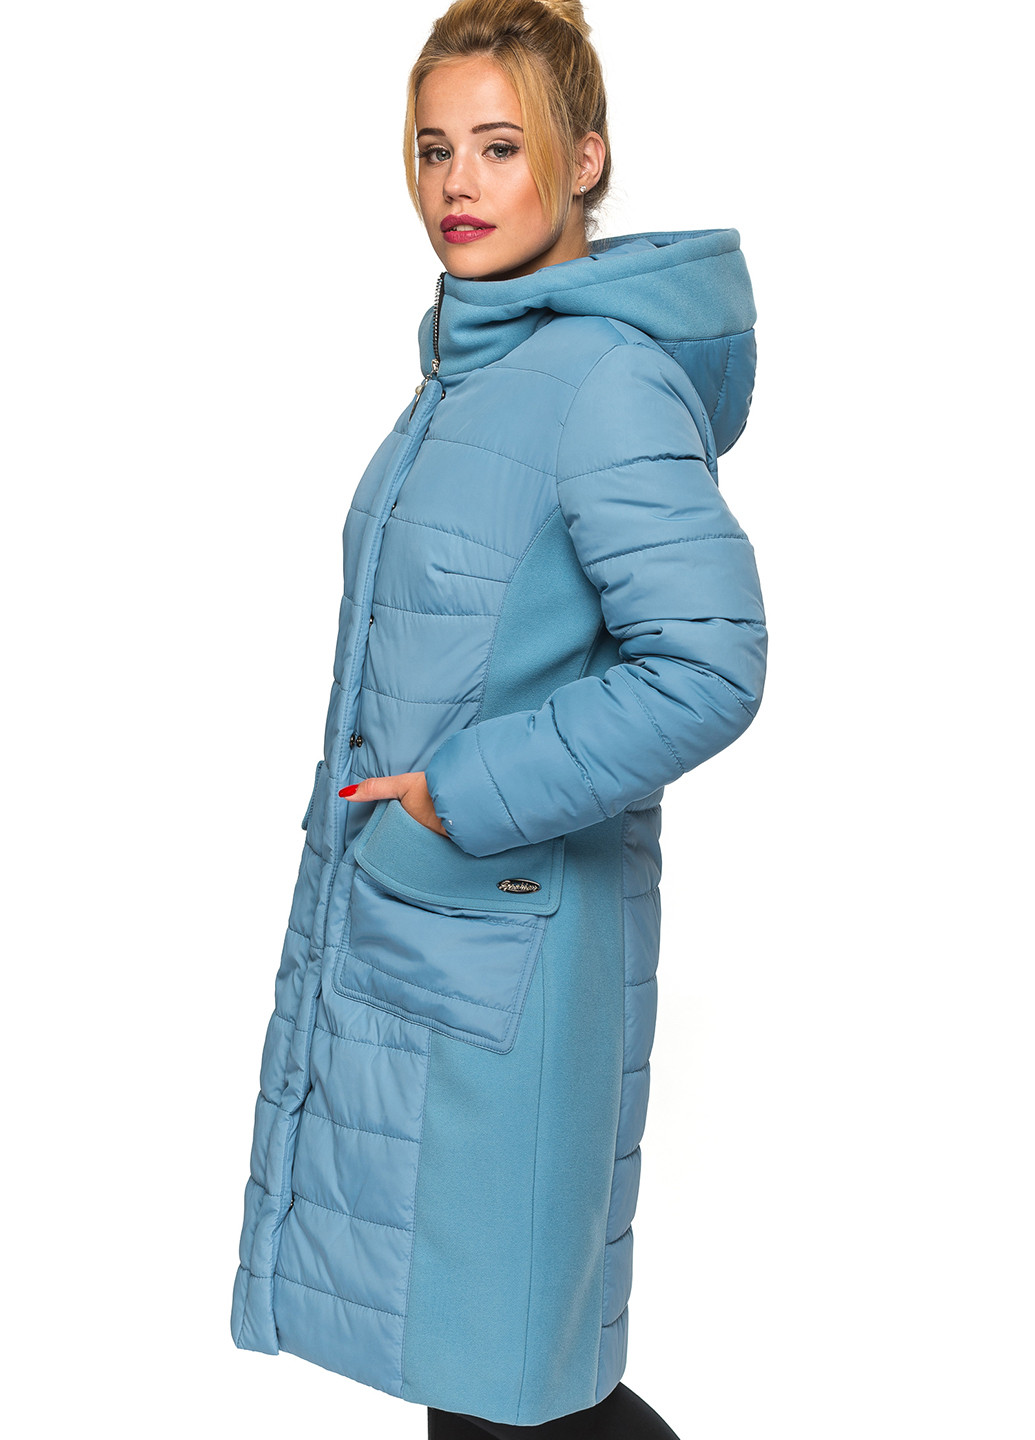 Голубая зимняя куртка Кариант